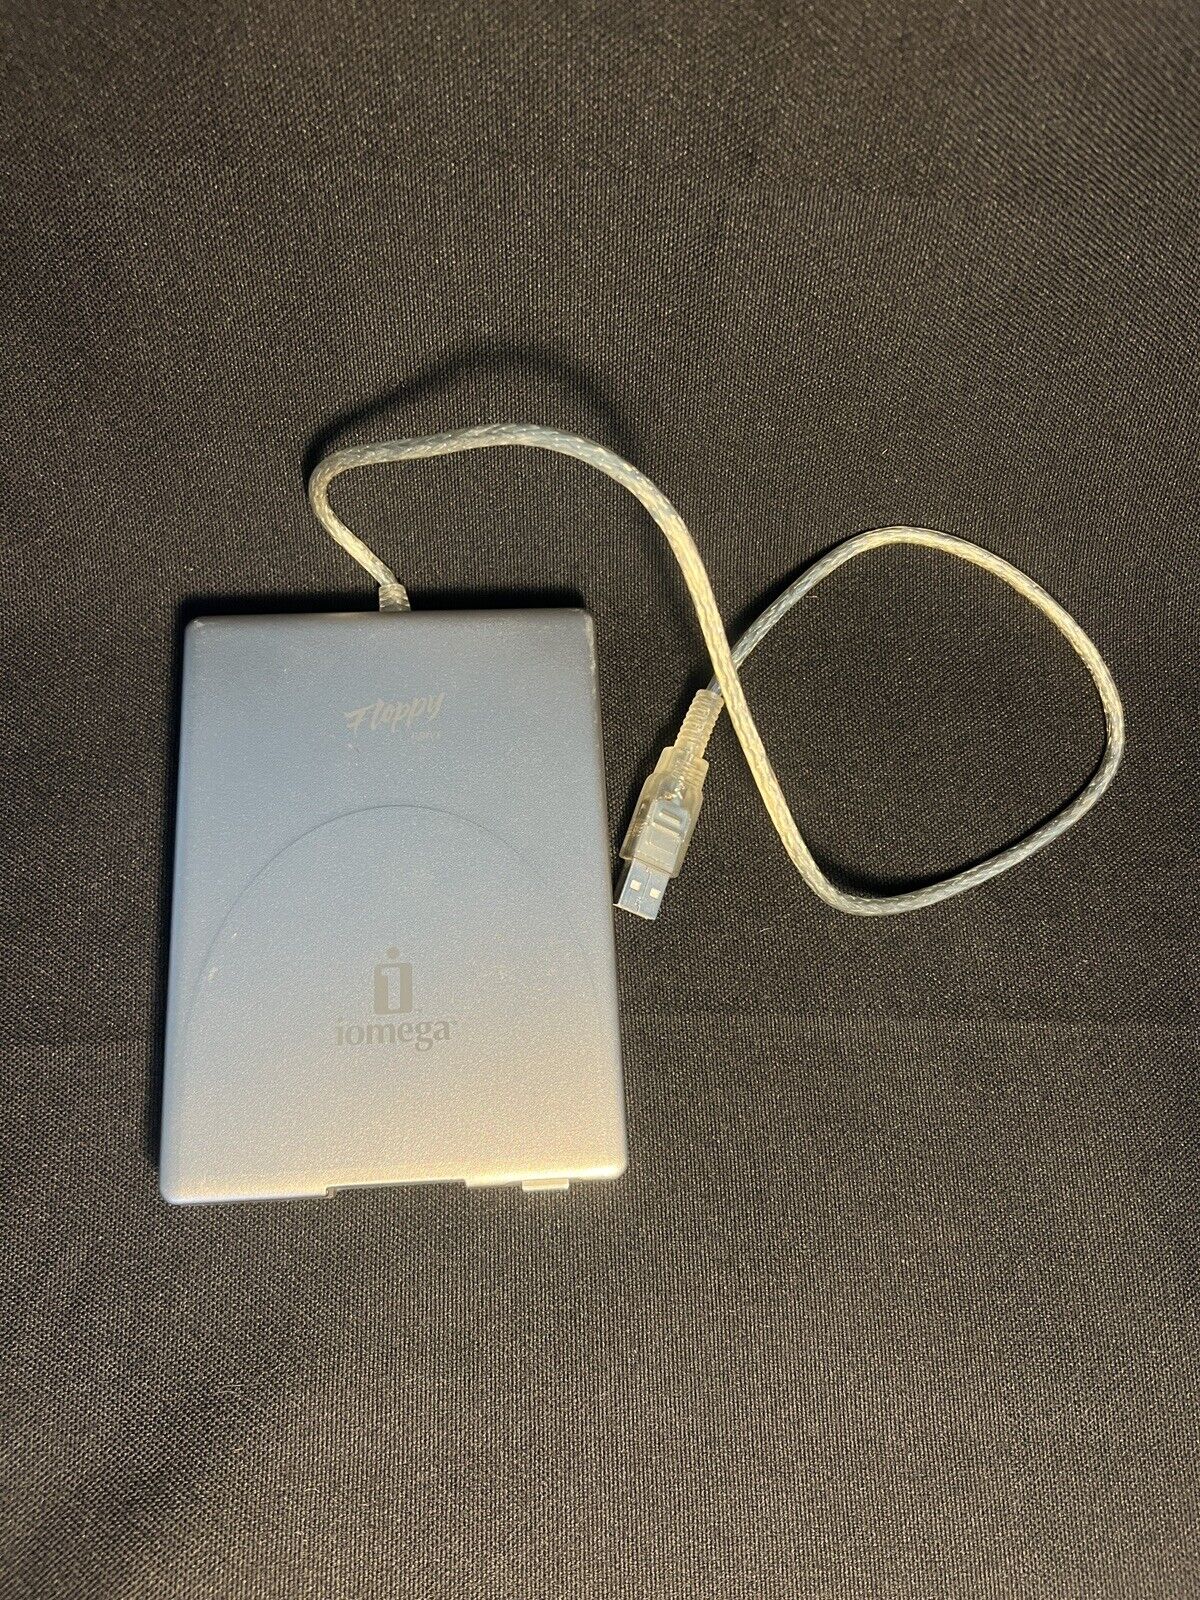 iomega USB-Powered External Floppy Drive Model BXXU013B *SEE DESCRIPTION*